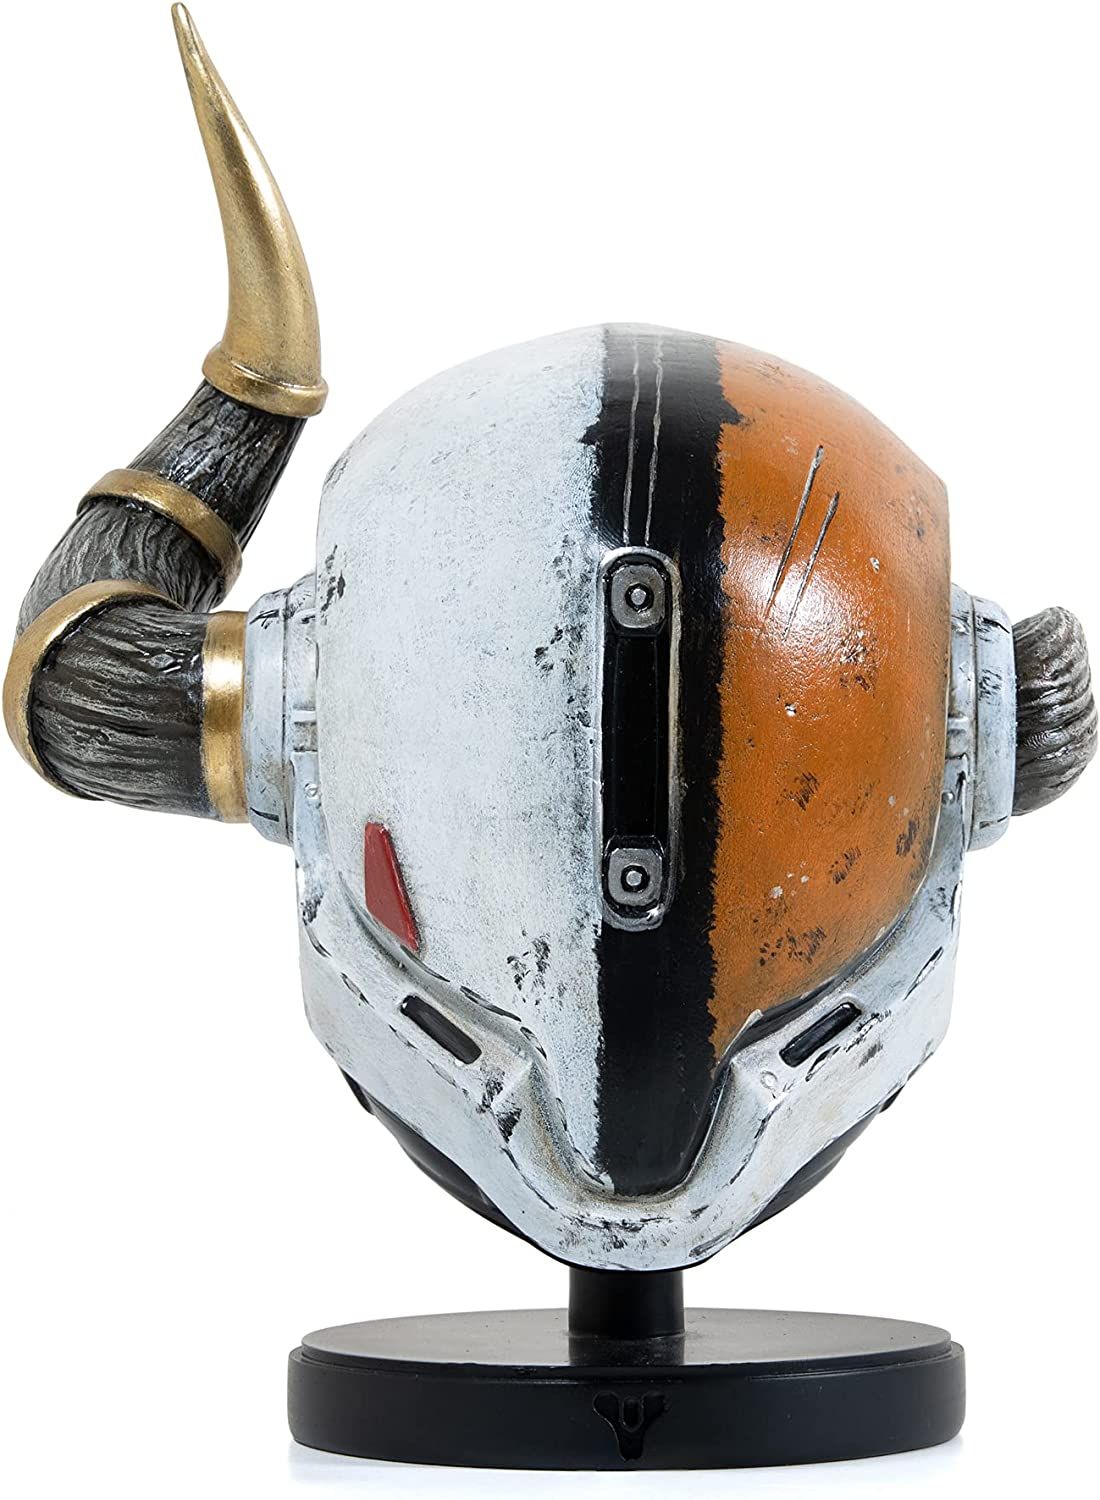 Destiny 2 Lord Shaxx Helmet